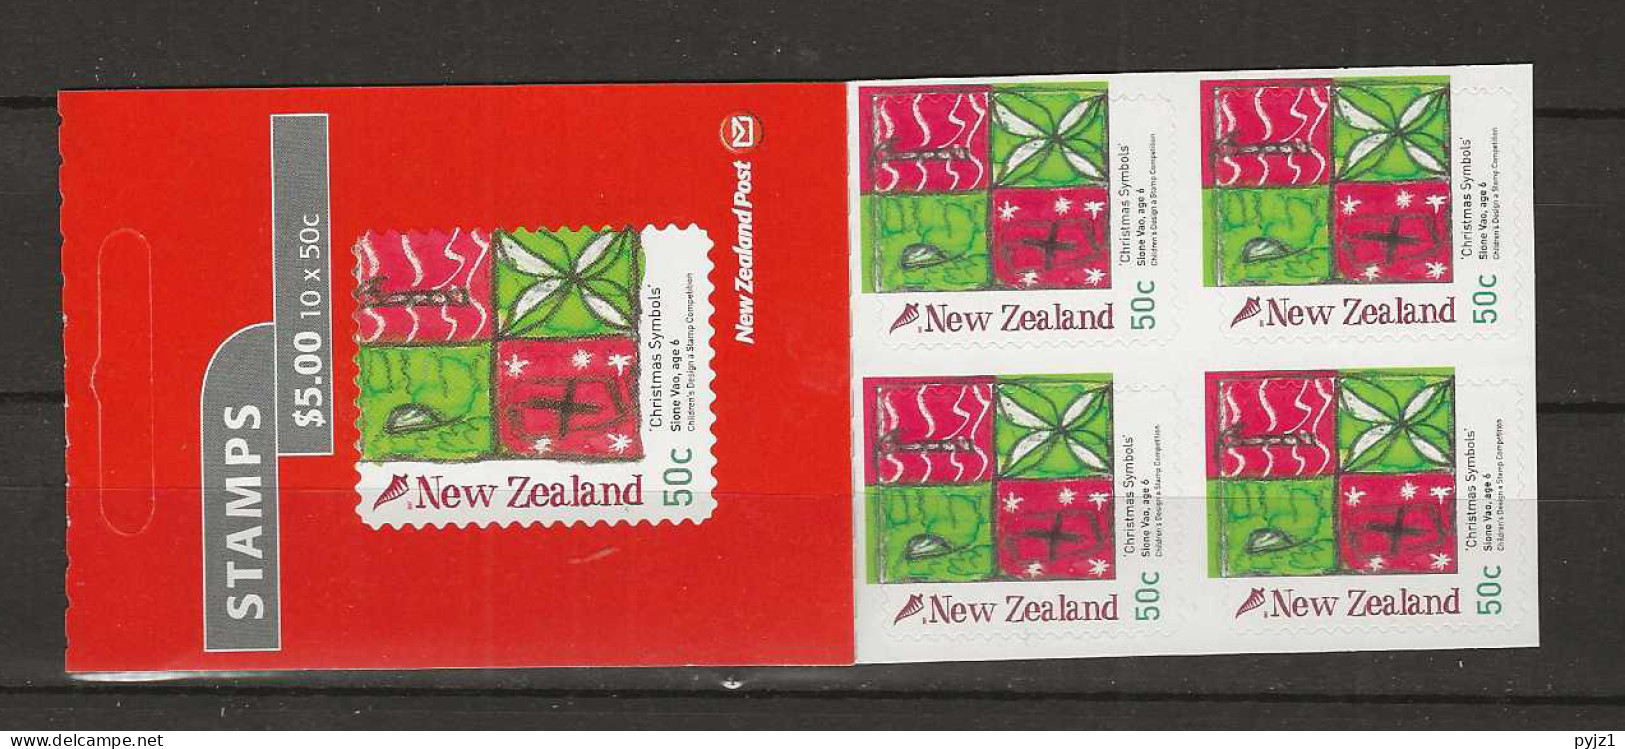 2007 MNH New Zealand Booklet Mi 2462 Postfris** - Booklets